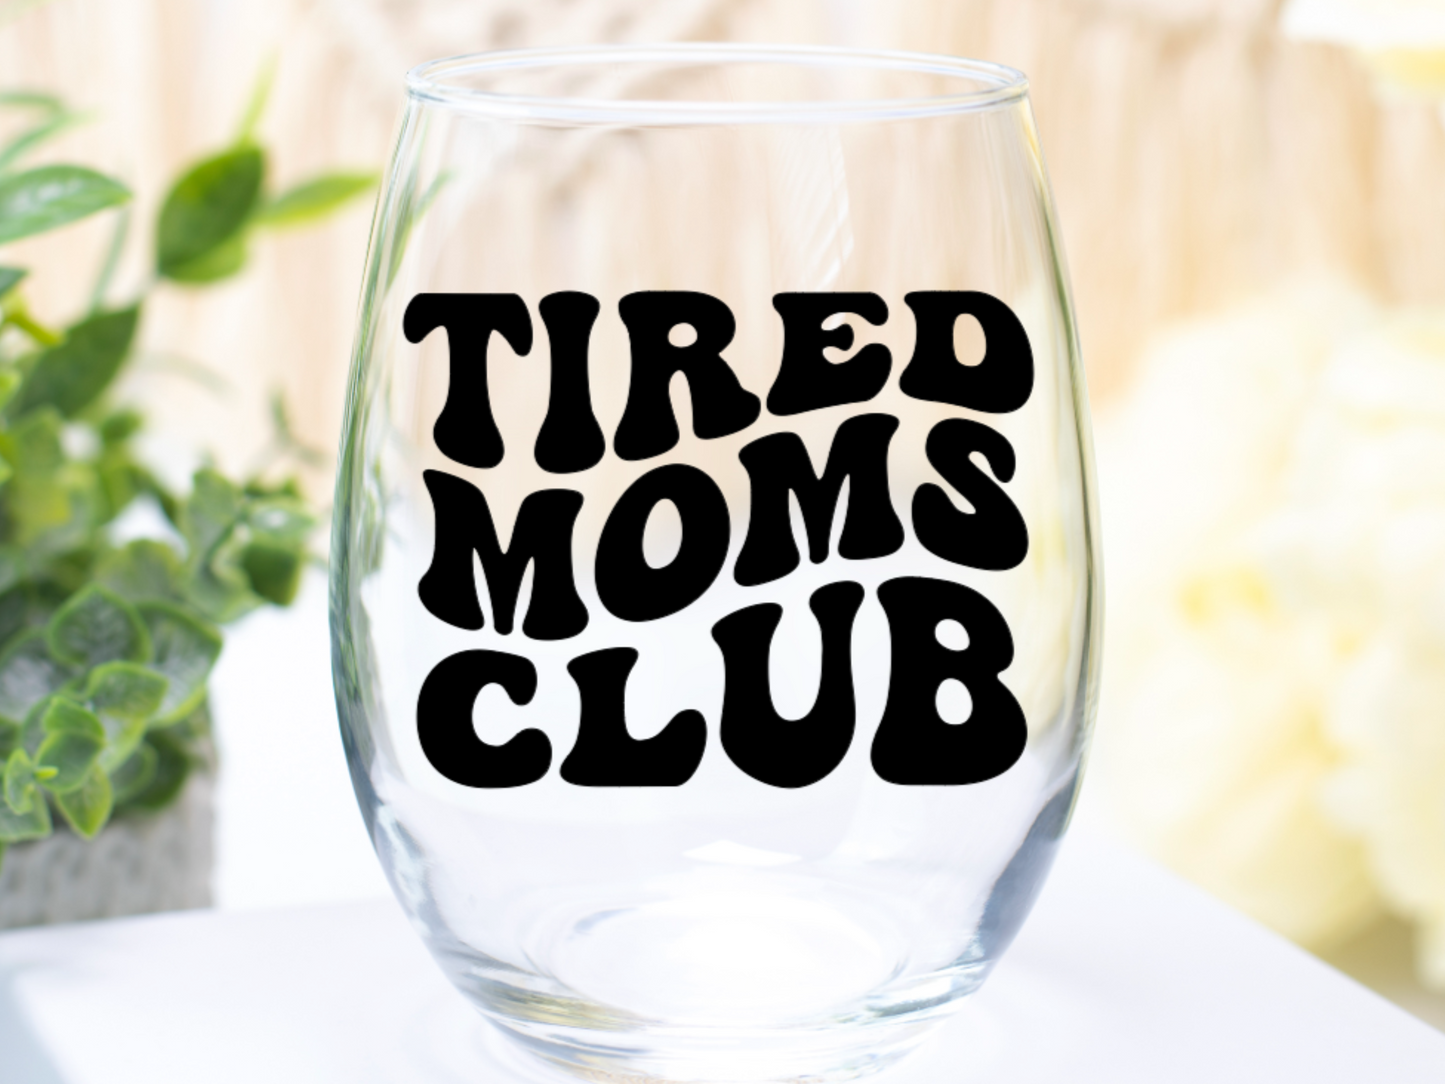 Tired Moms Club Wine Glass